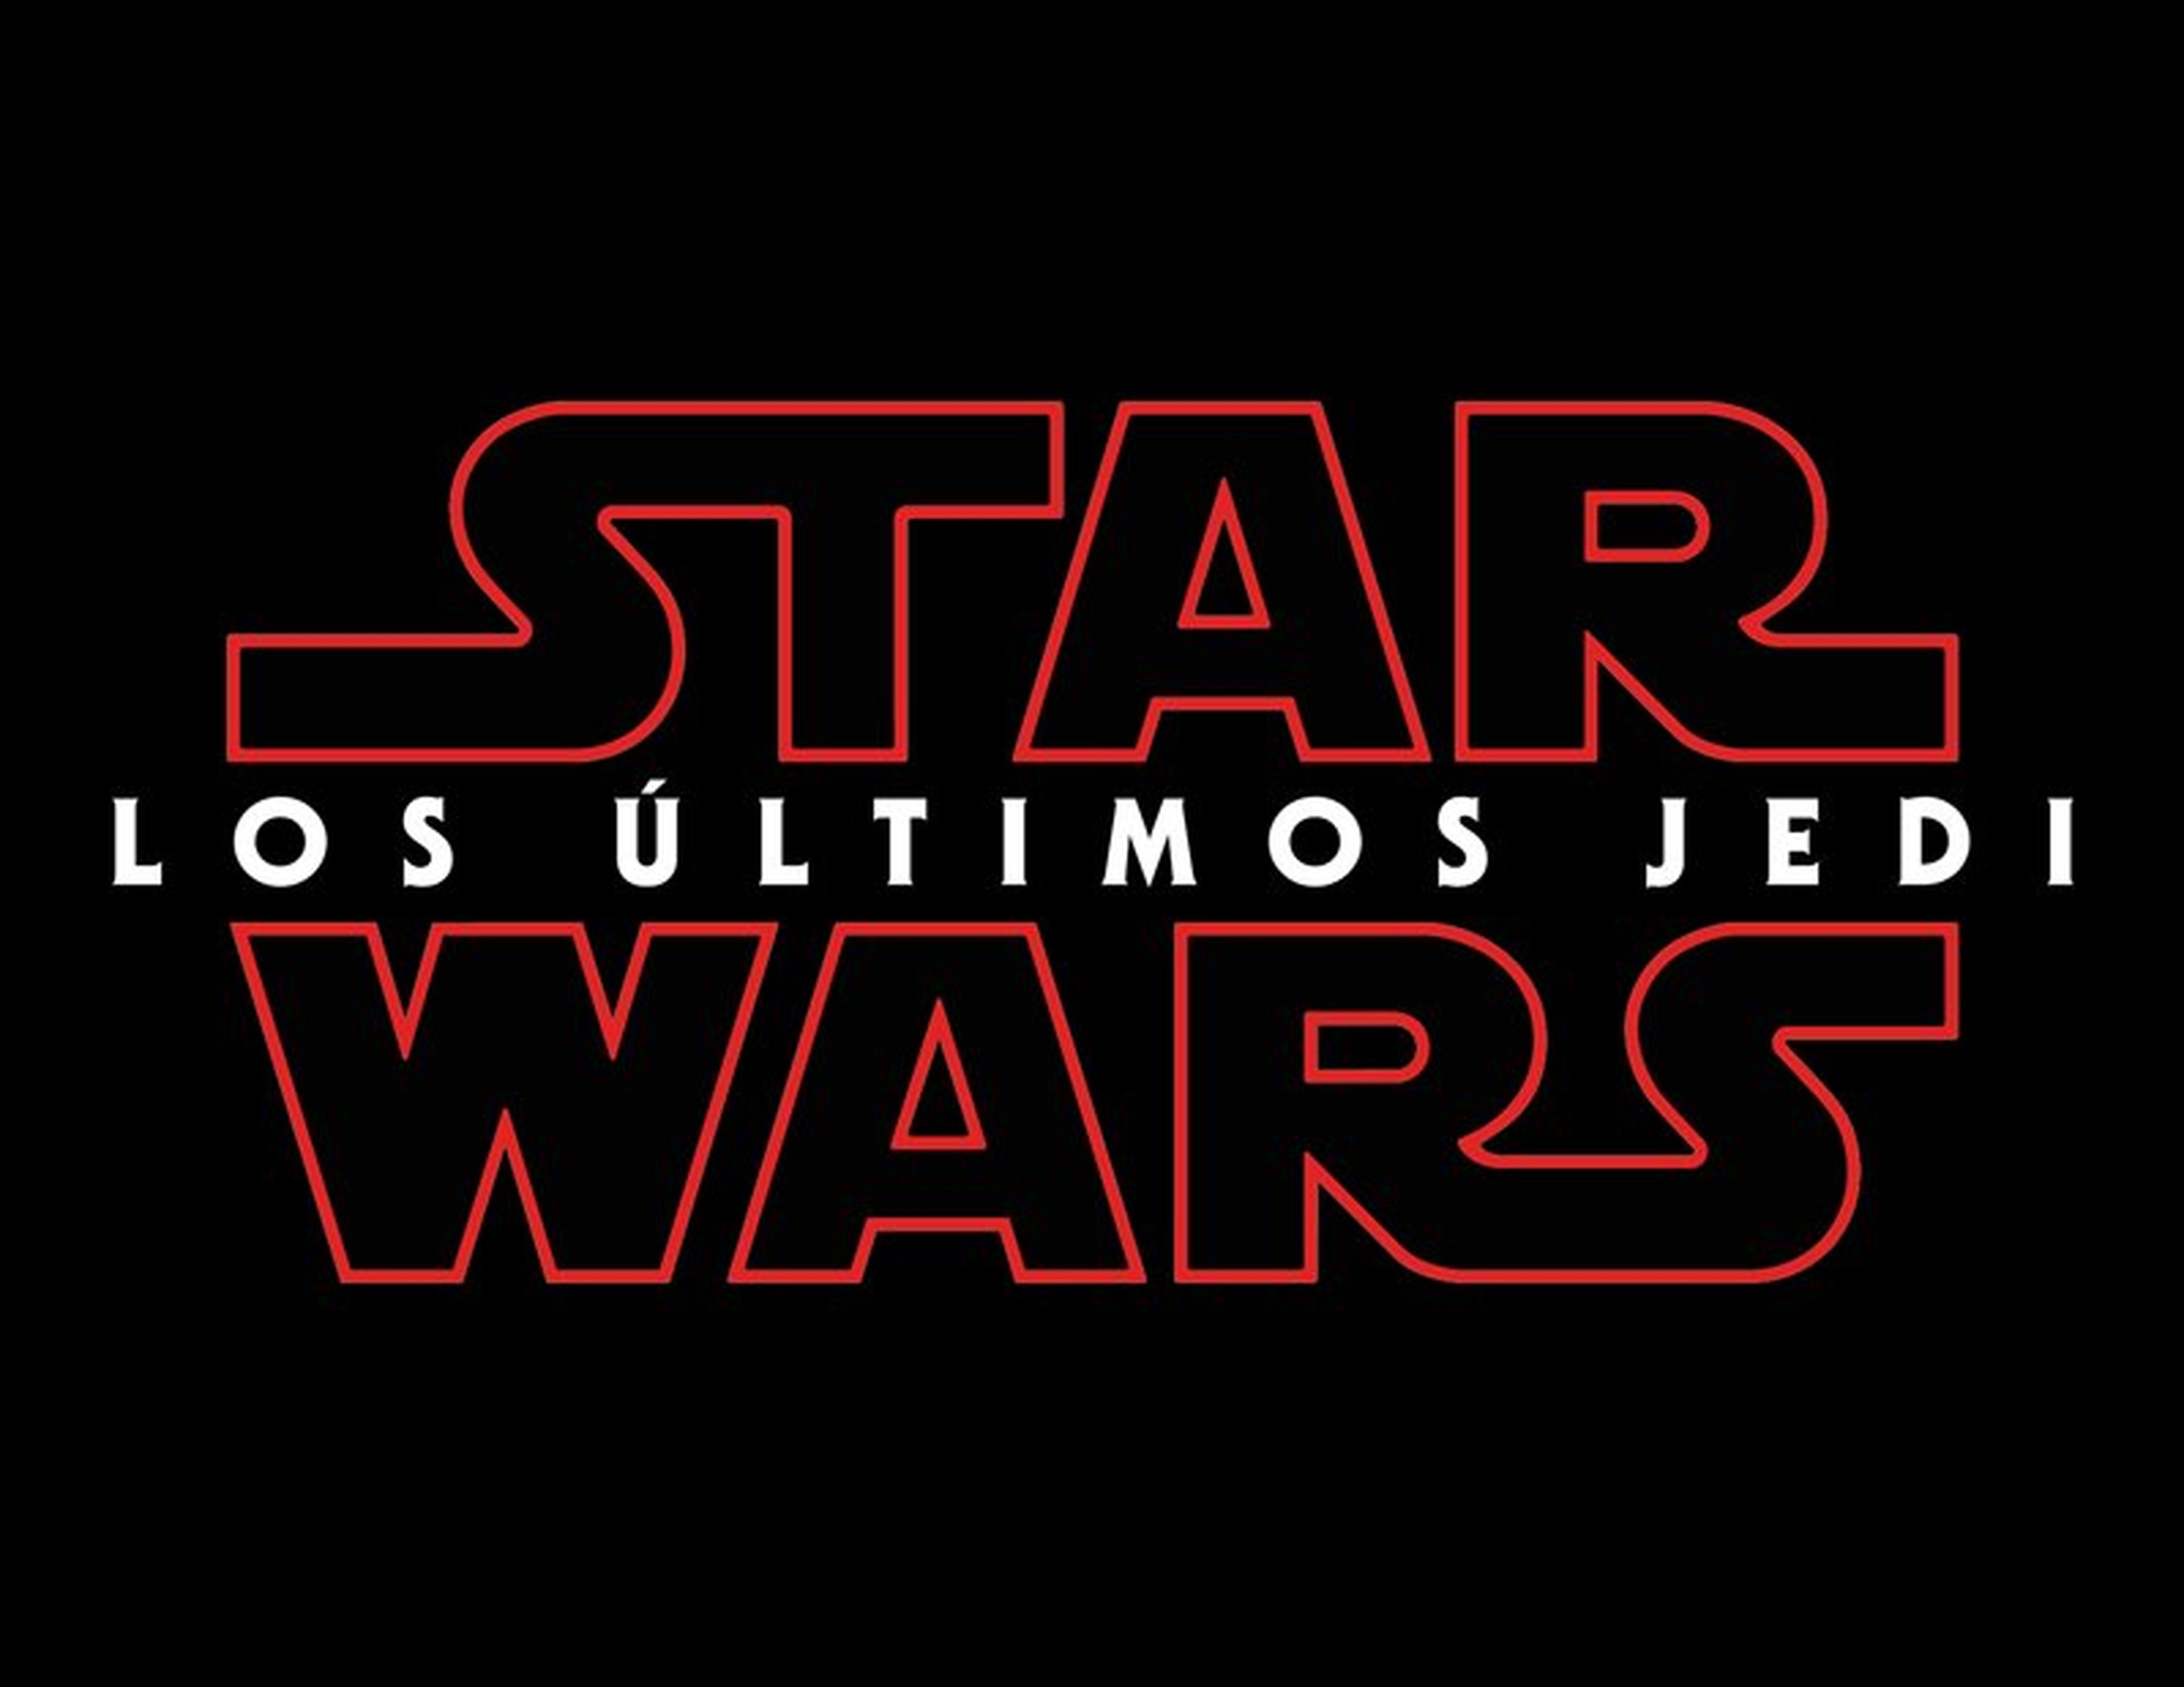 Star Wars VIII Los Últimos Jedi